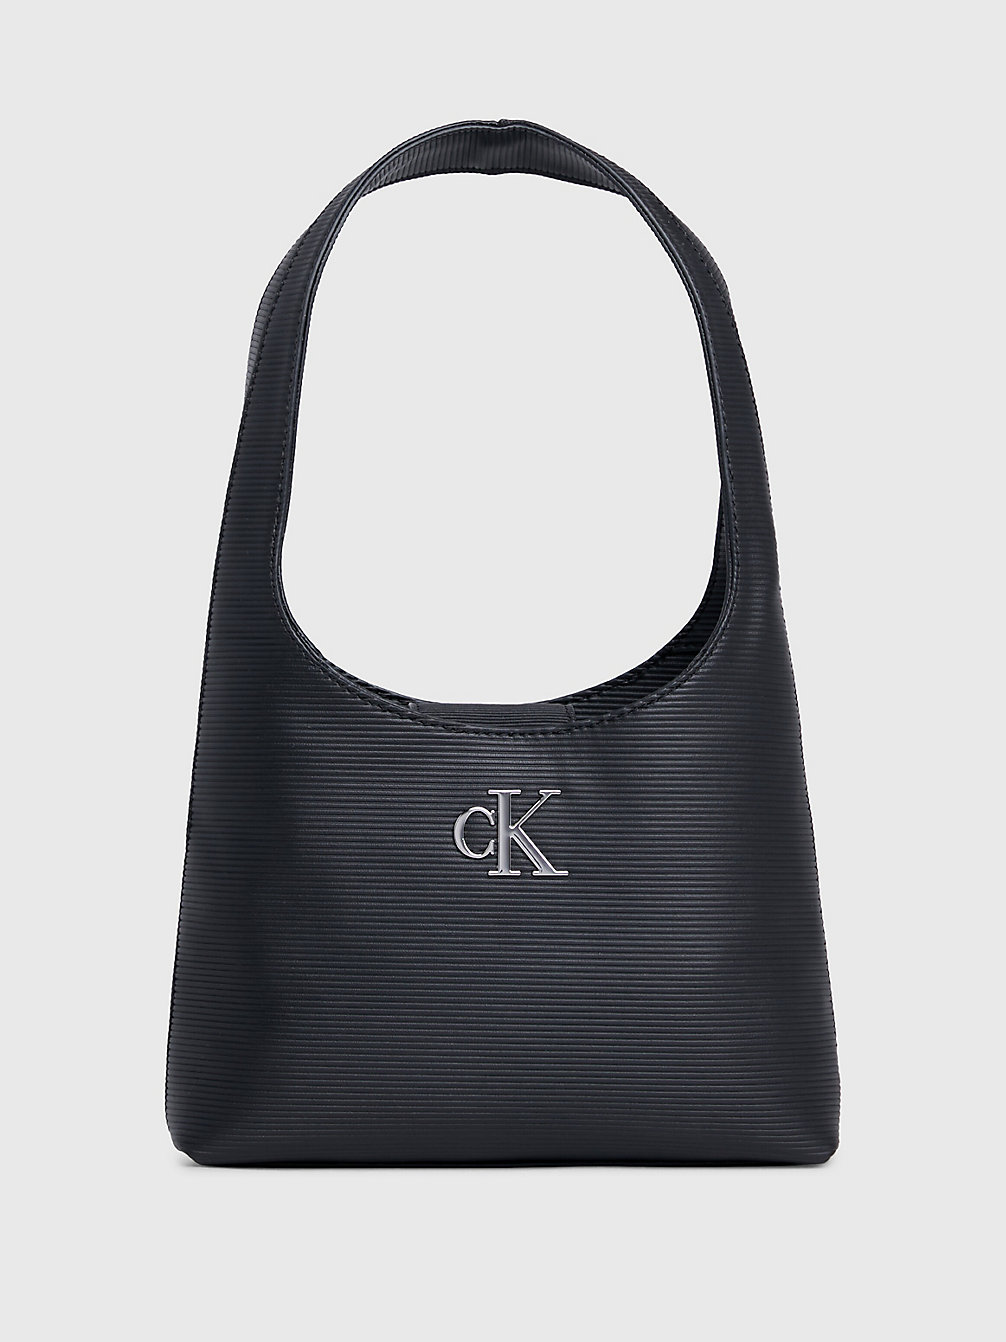 undefined Shoulder Bag undefined women Calvin Klein